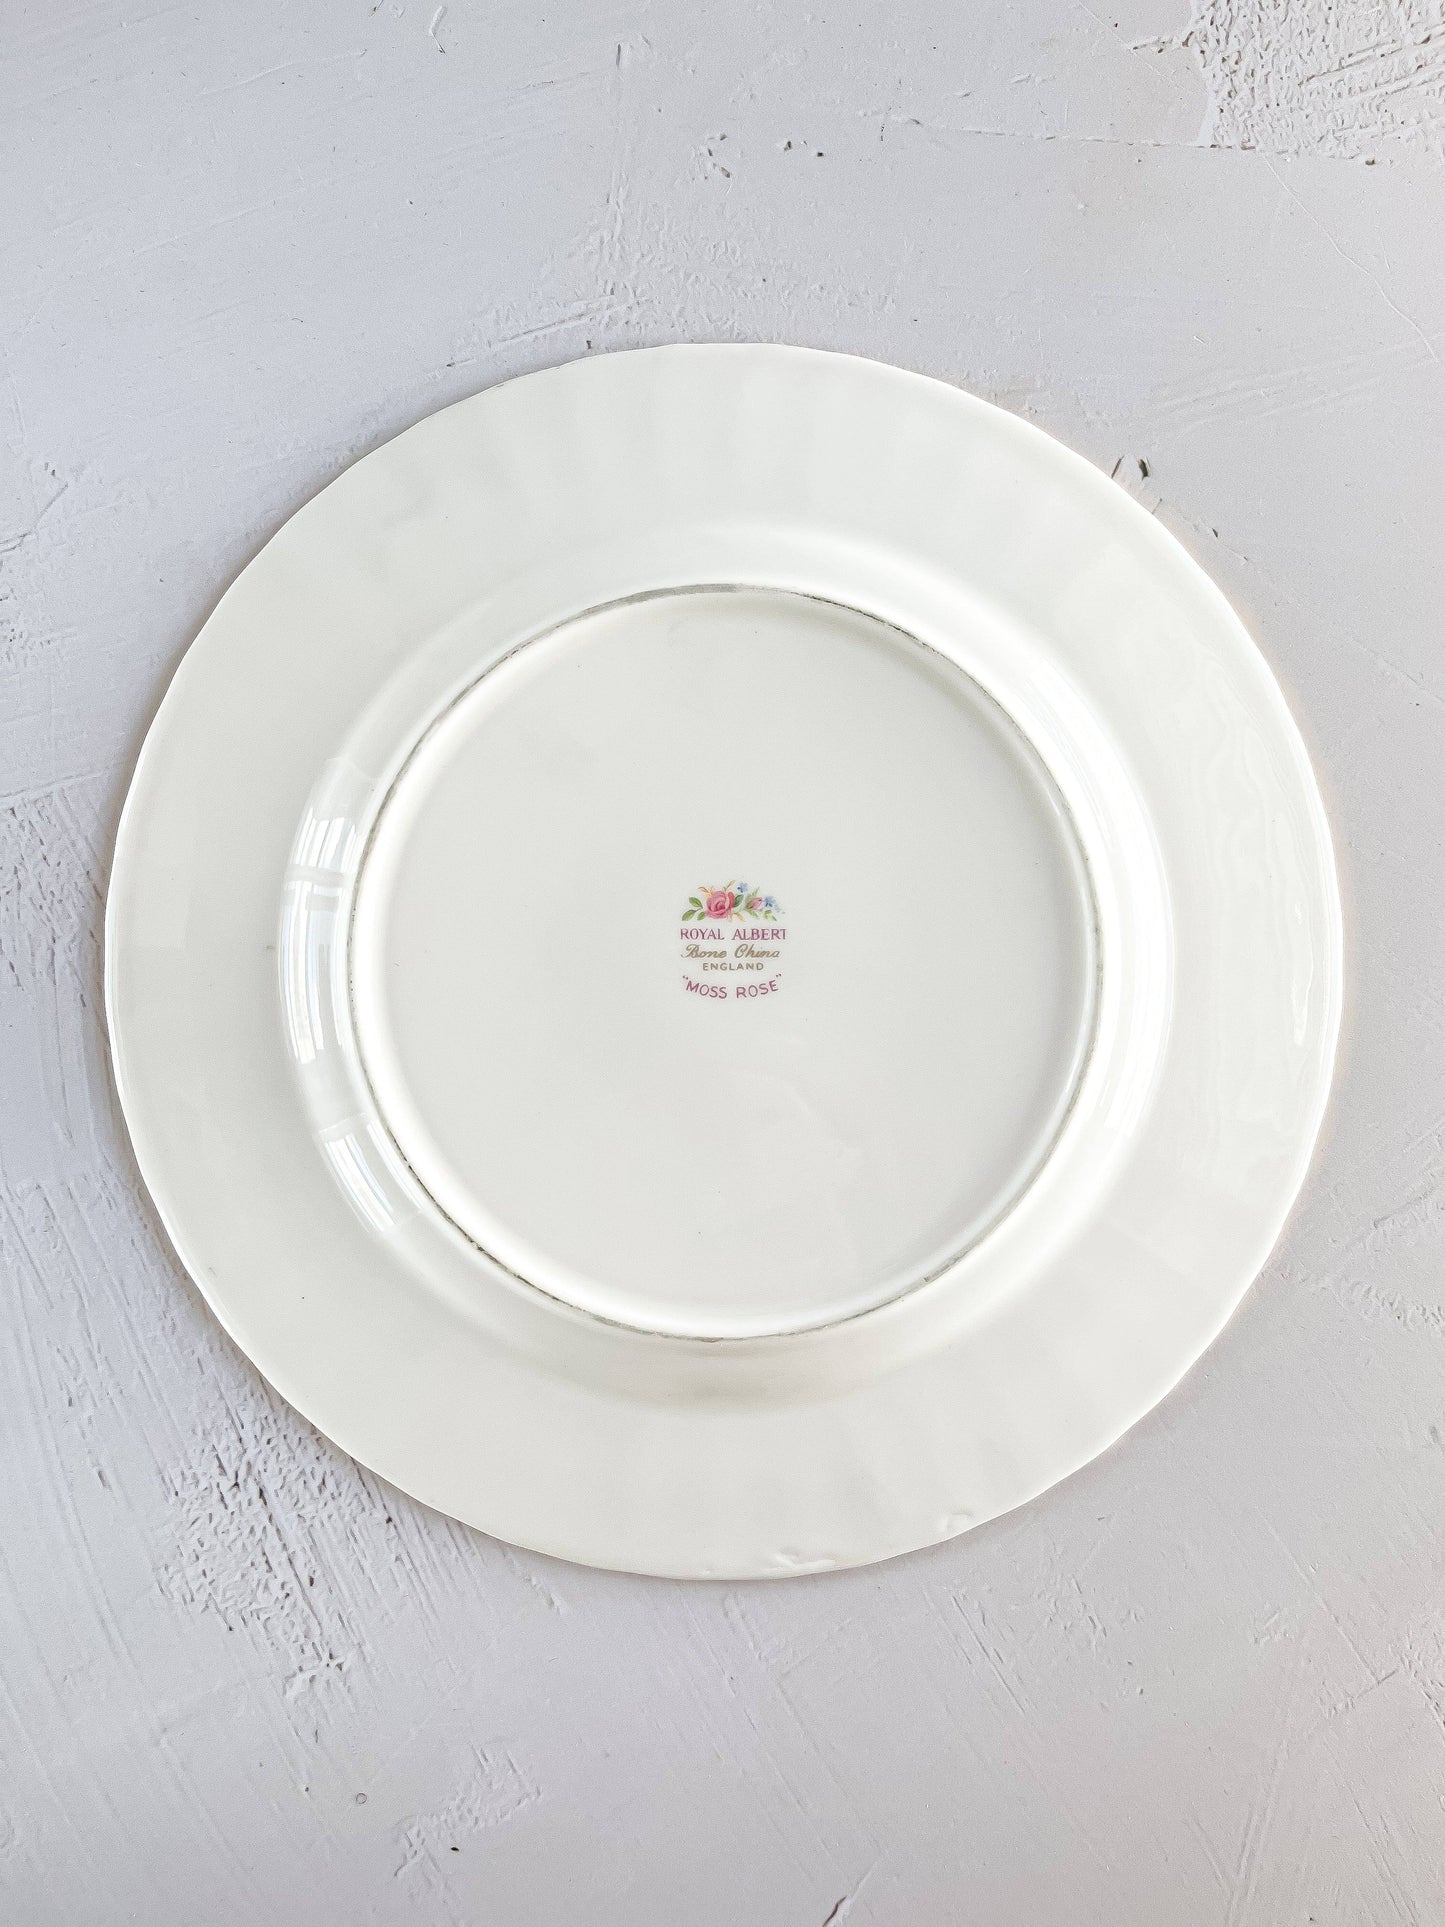 Royal Albert Salad Plate - 'Moss Rose' Collection - SOSC Home